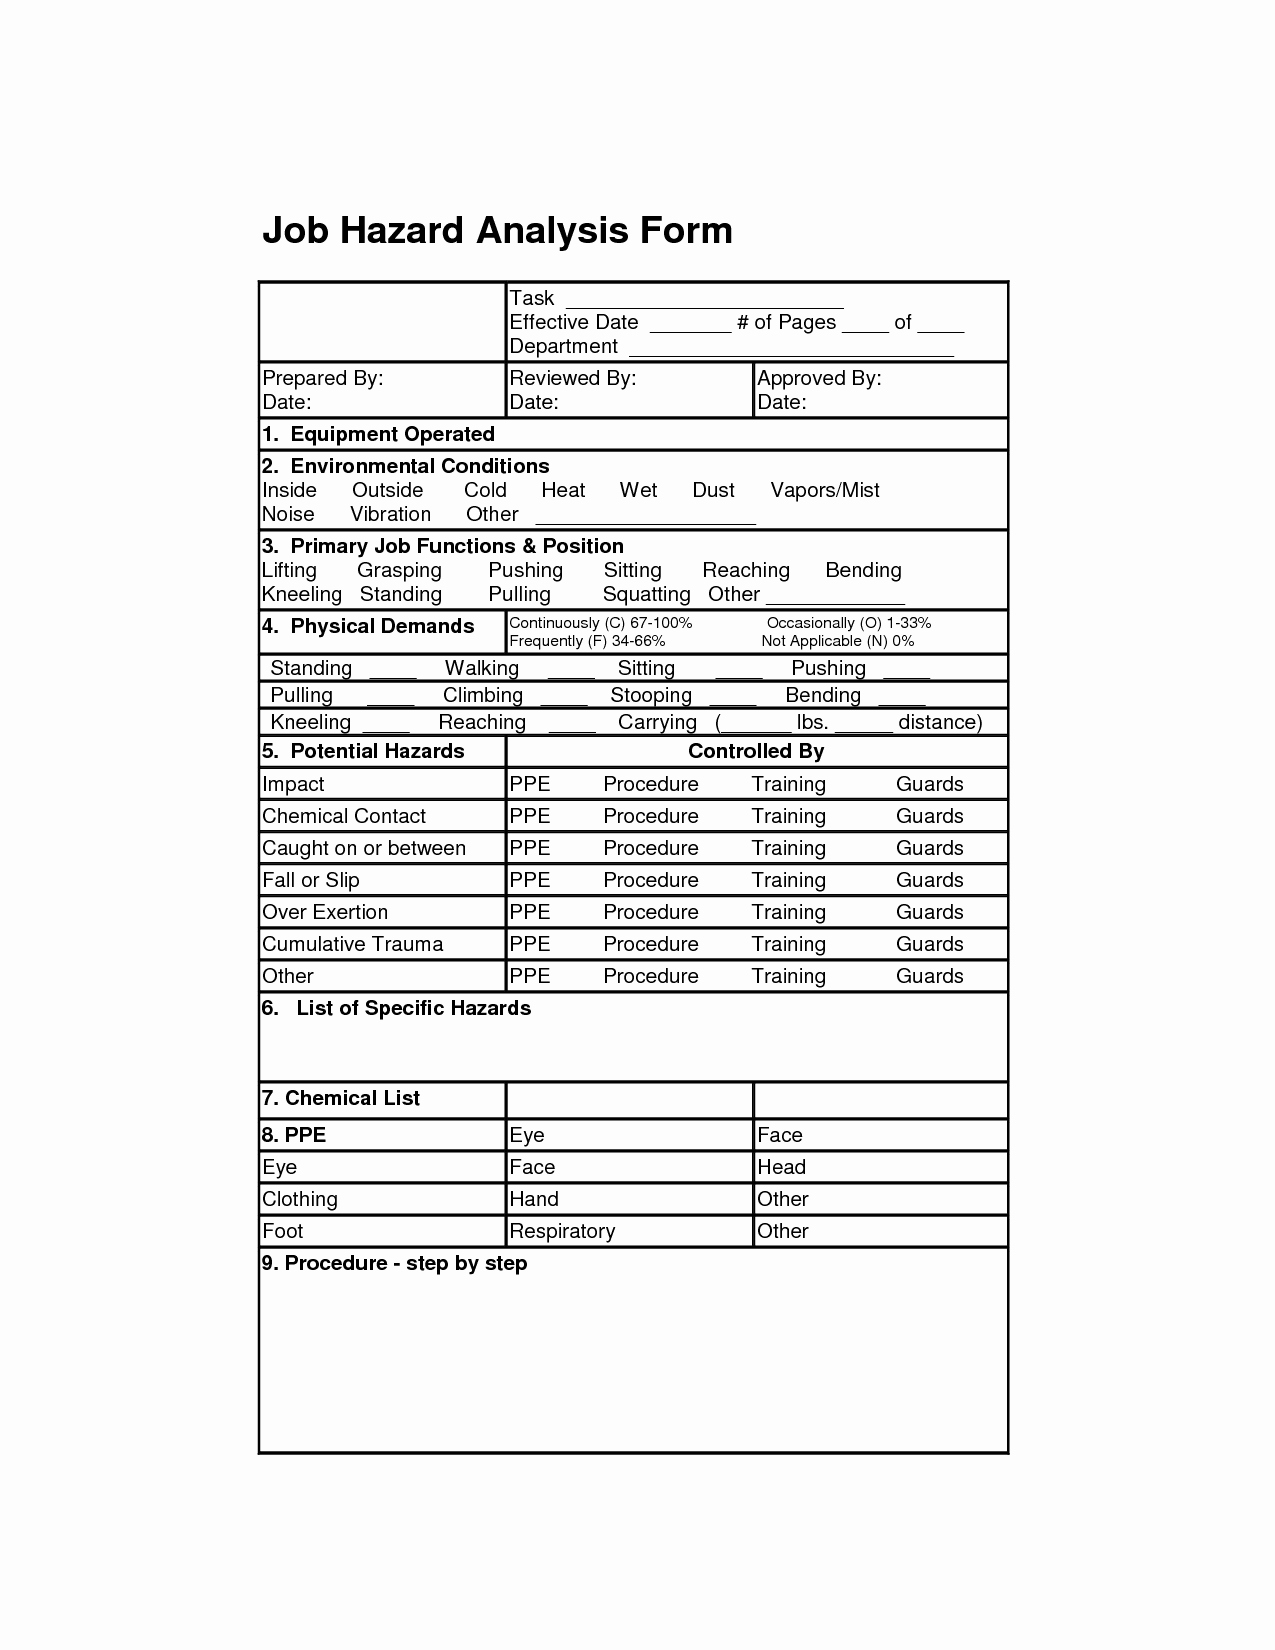 Activity Hazard Analysis Template New Job Hazard Analysis form Job Analysis forms